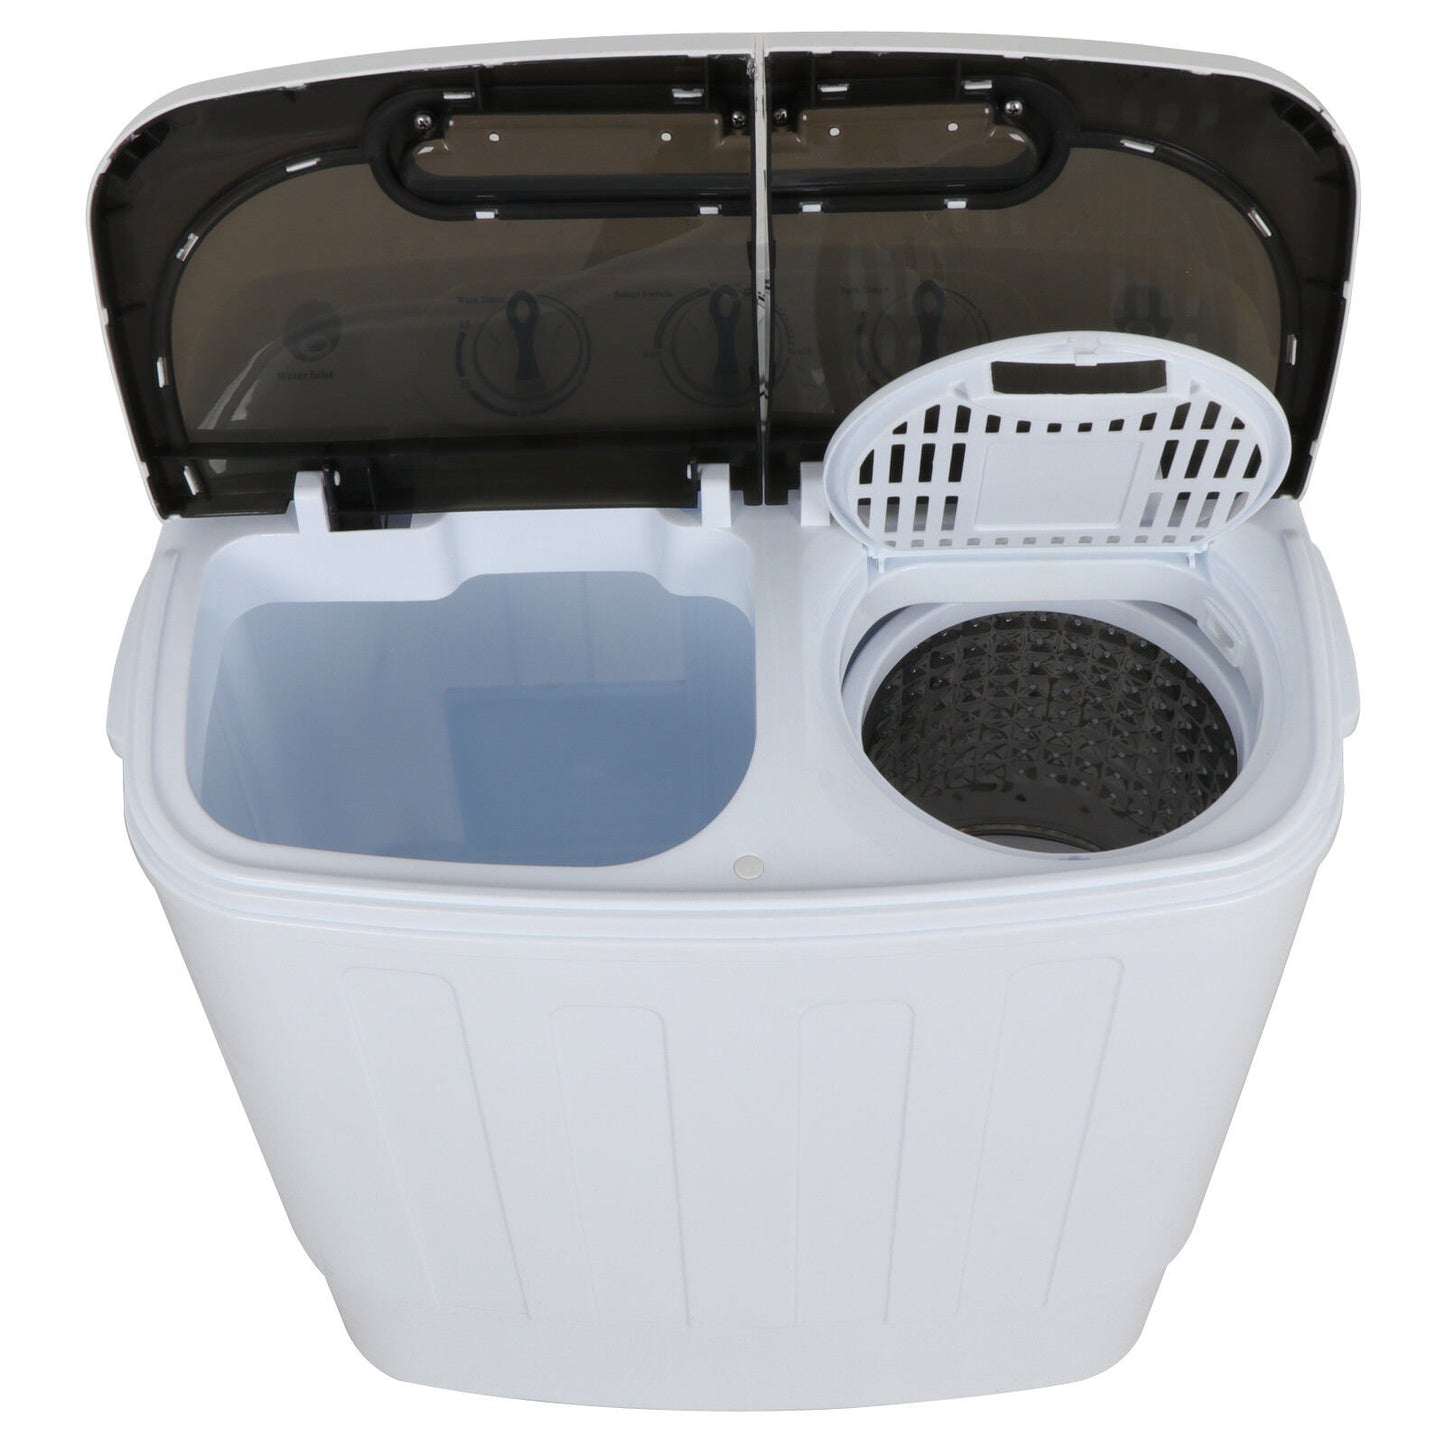 Compact Mini Twin Tub Washing Machine Portable 13lbs Laundry Washer and Dryer